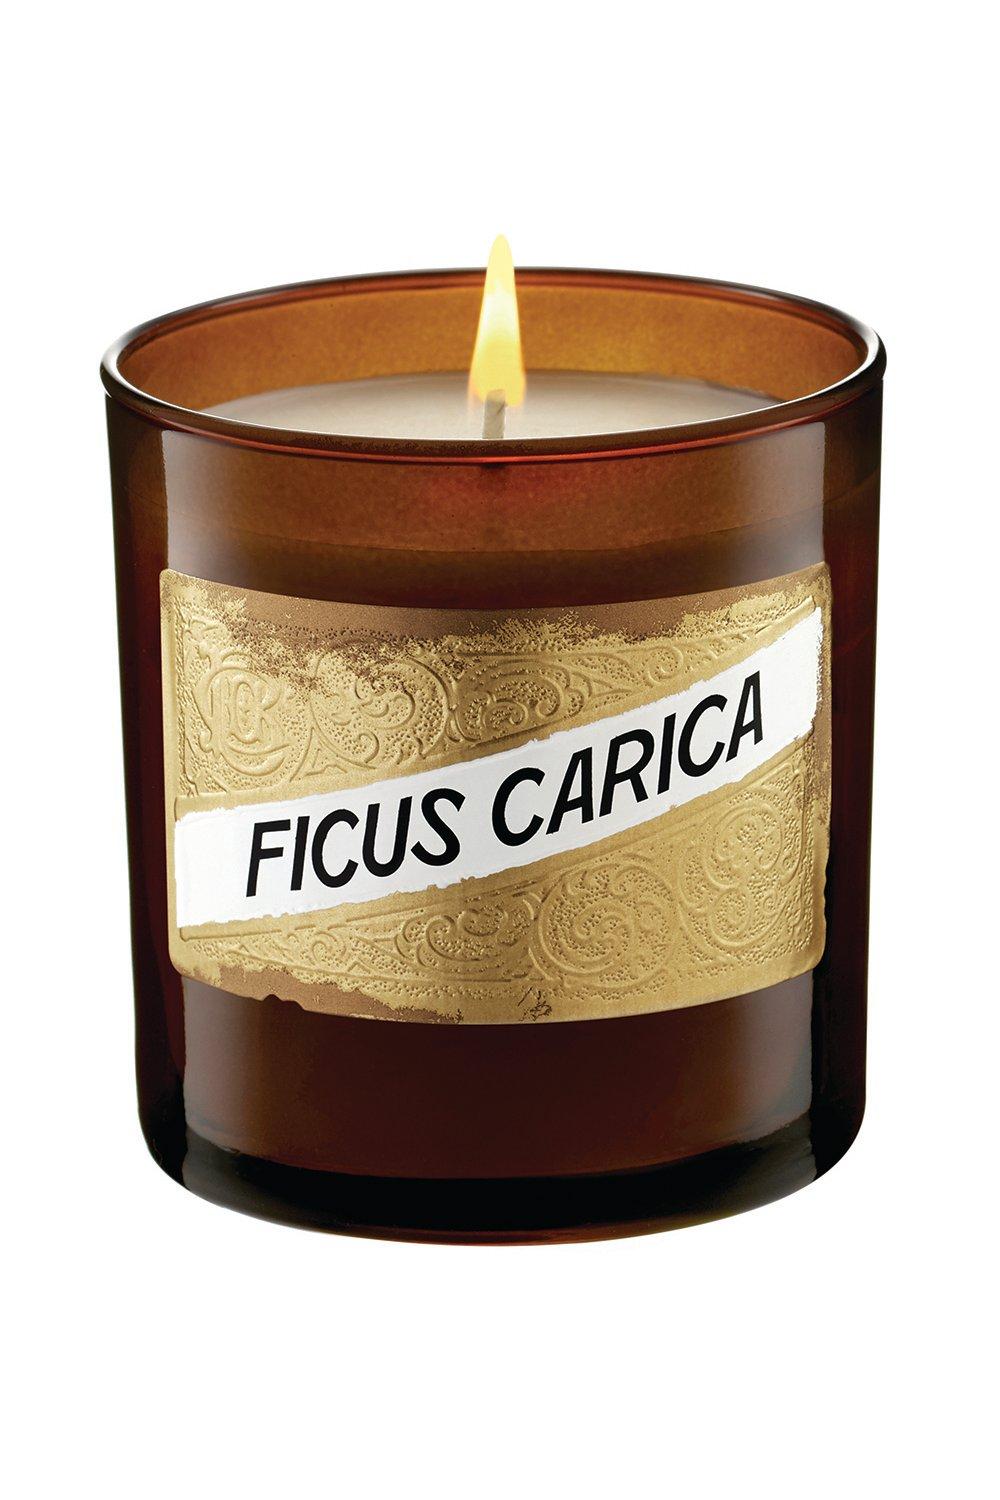 Ficus Carica (Fig) Candle